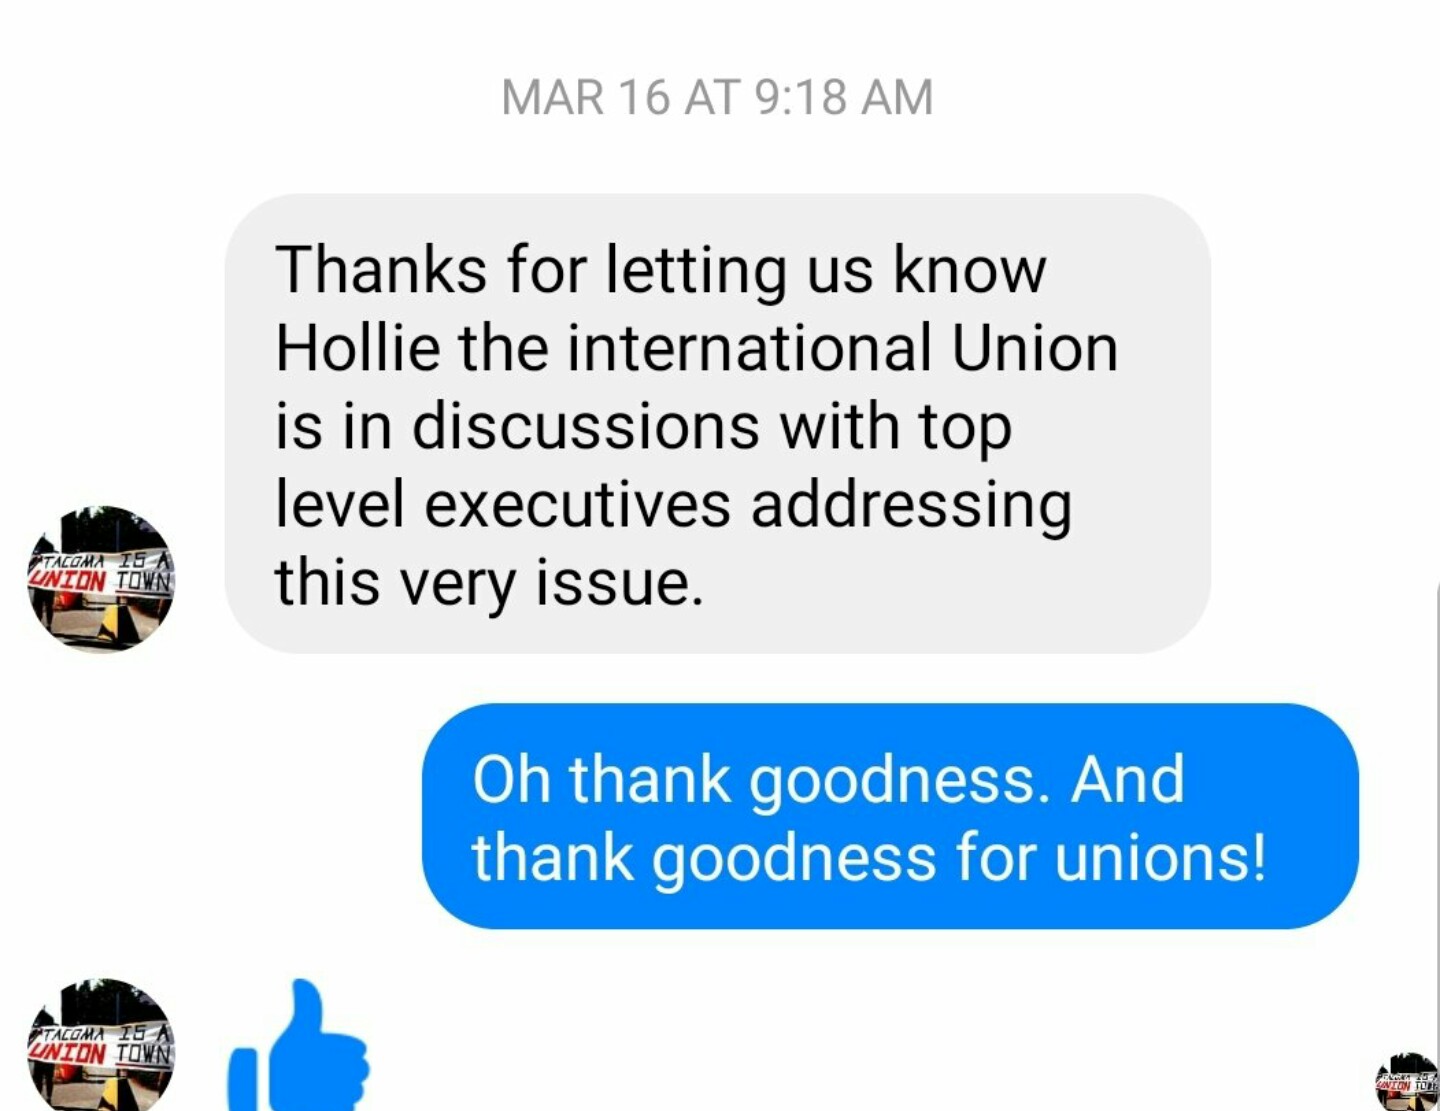 Union response